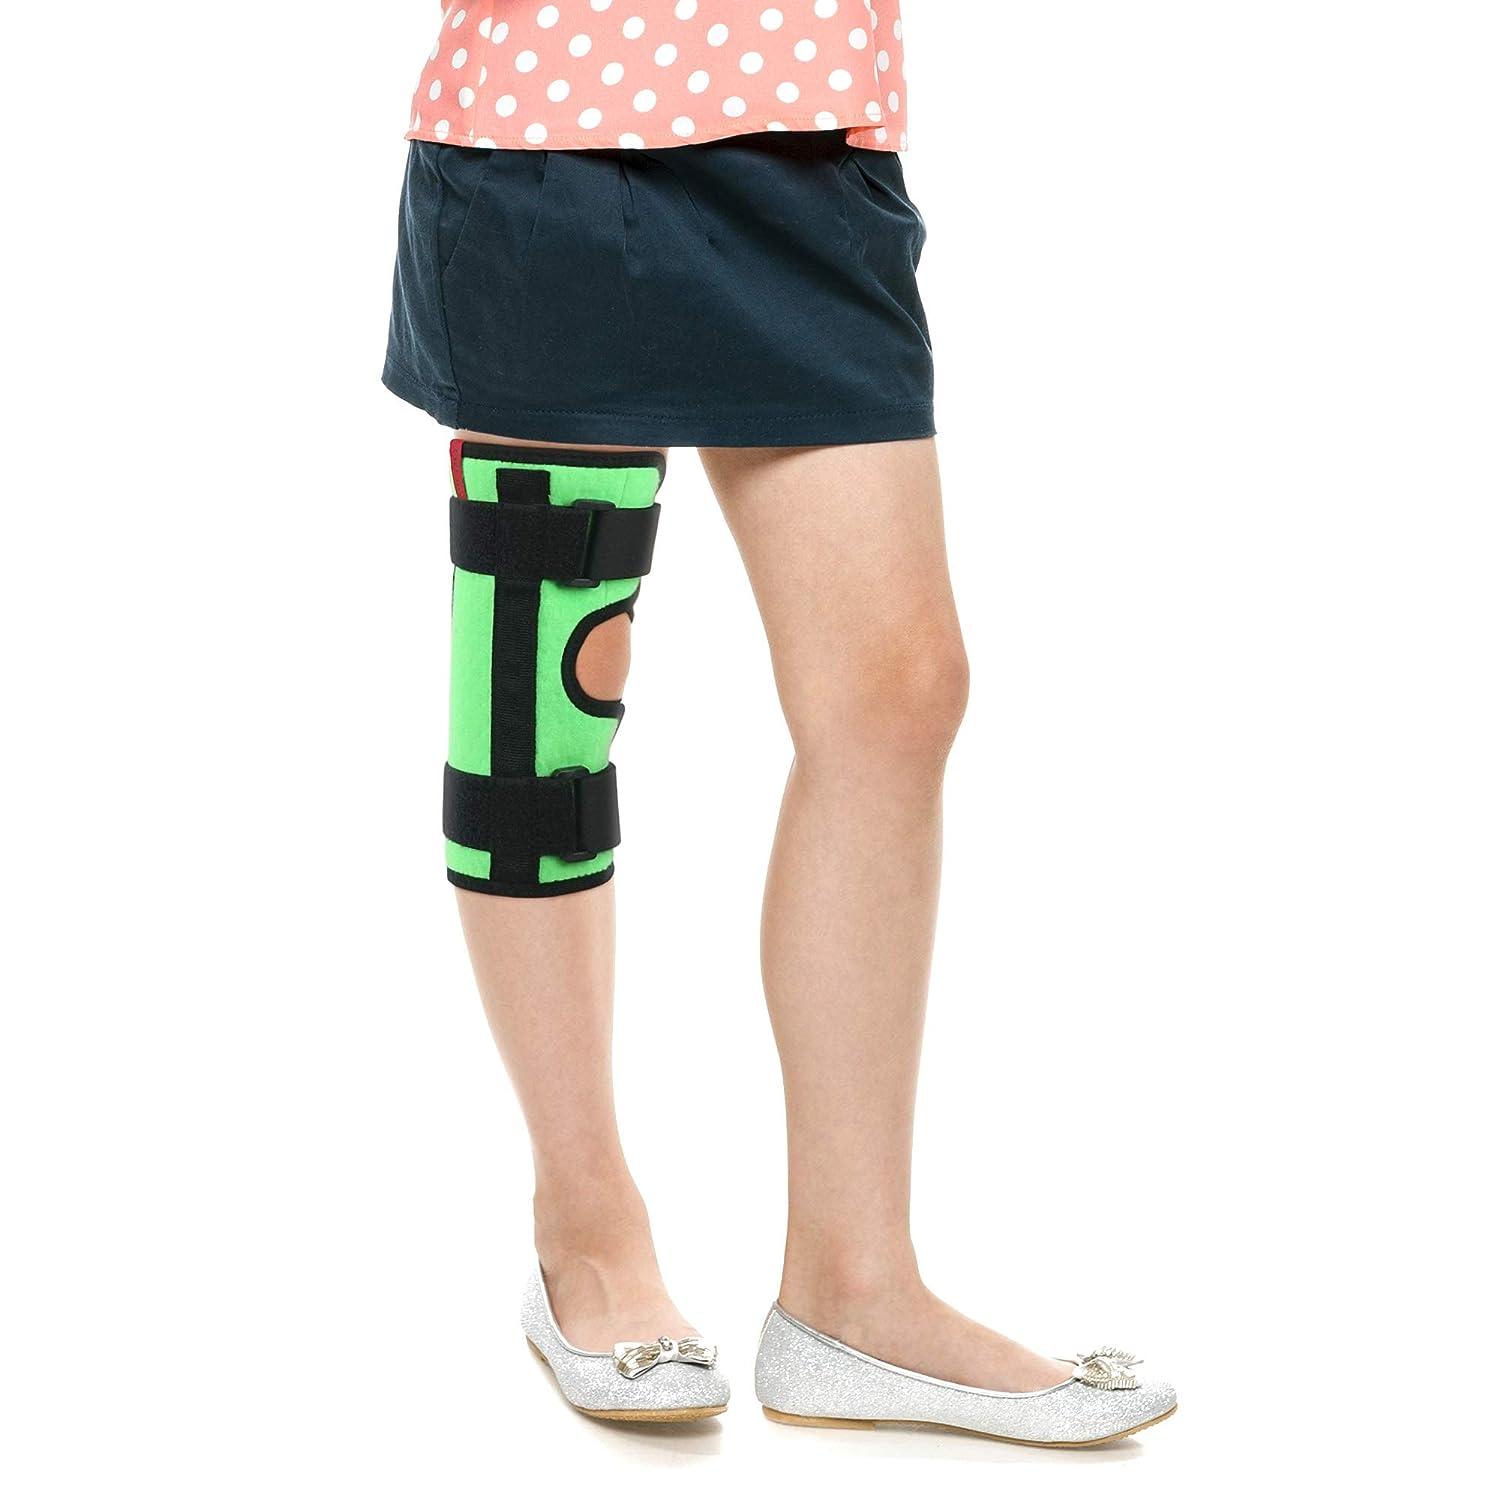 Buy ORTONYX Tri-Panel Knee Immobilizer Full Leg Brace - Breathable